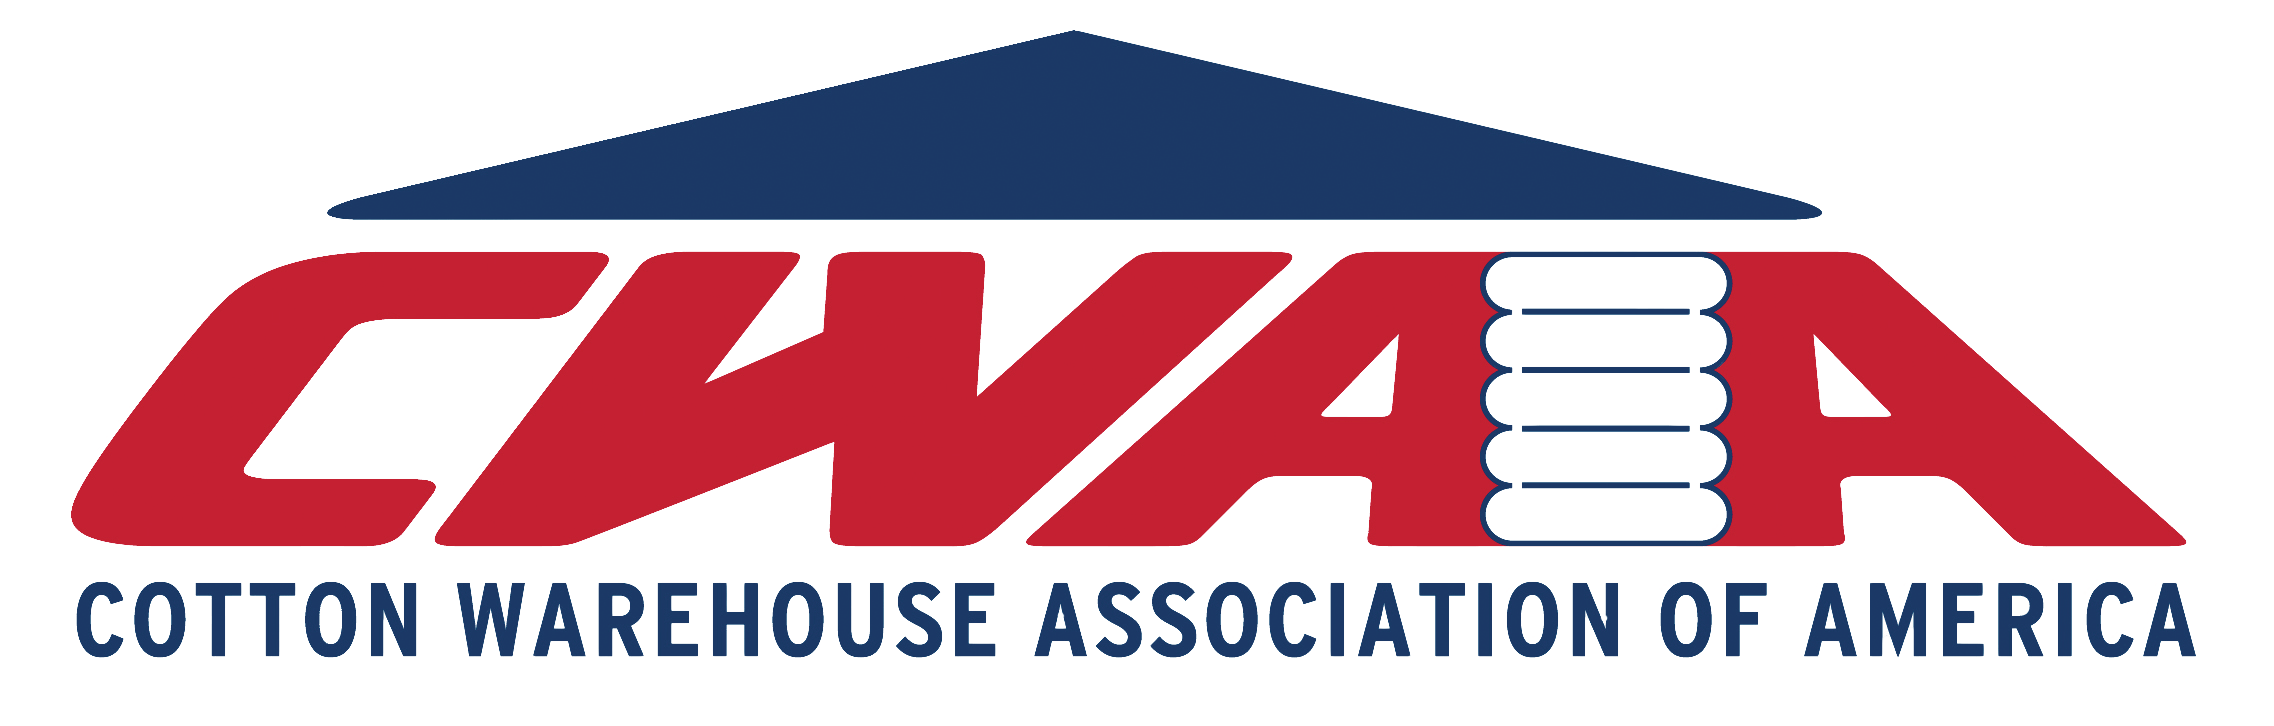 Cotton Warehouse Association of America